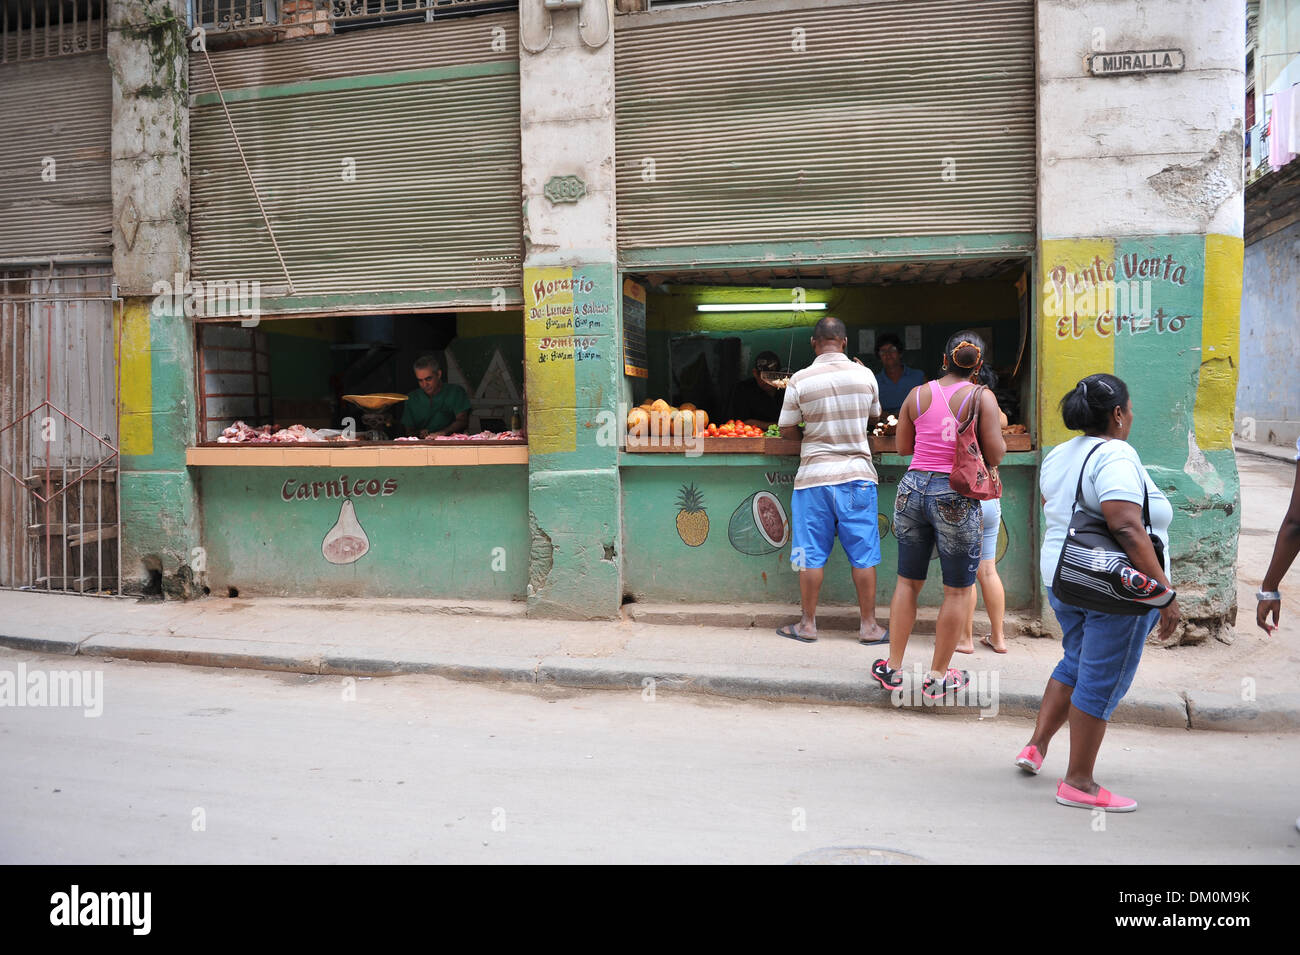 Heruntergekommen Sie, Lebensmittelgeschäft in Havanna, Kuba Stockfoto